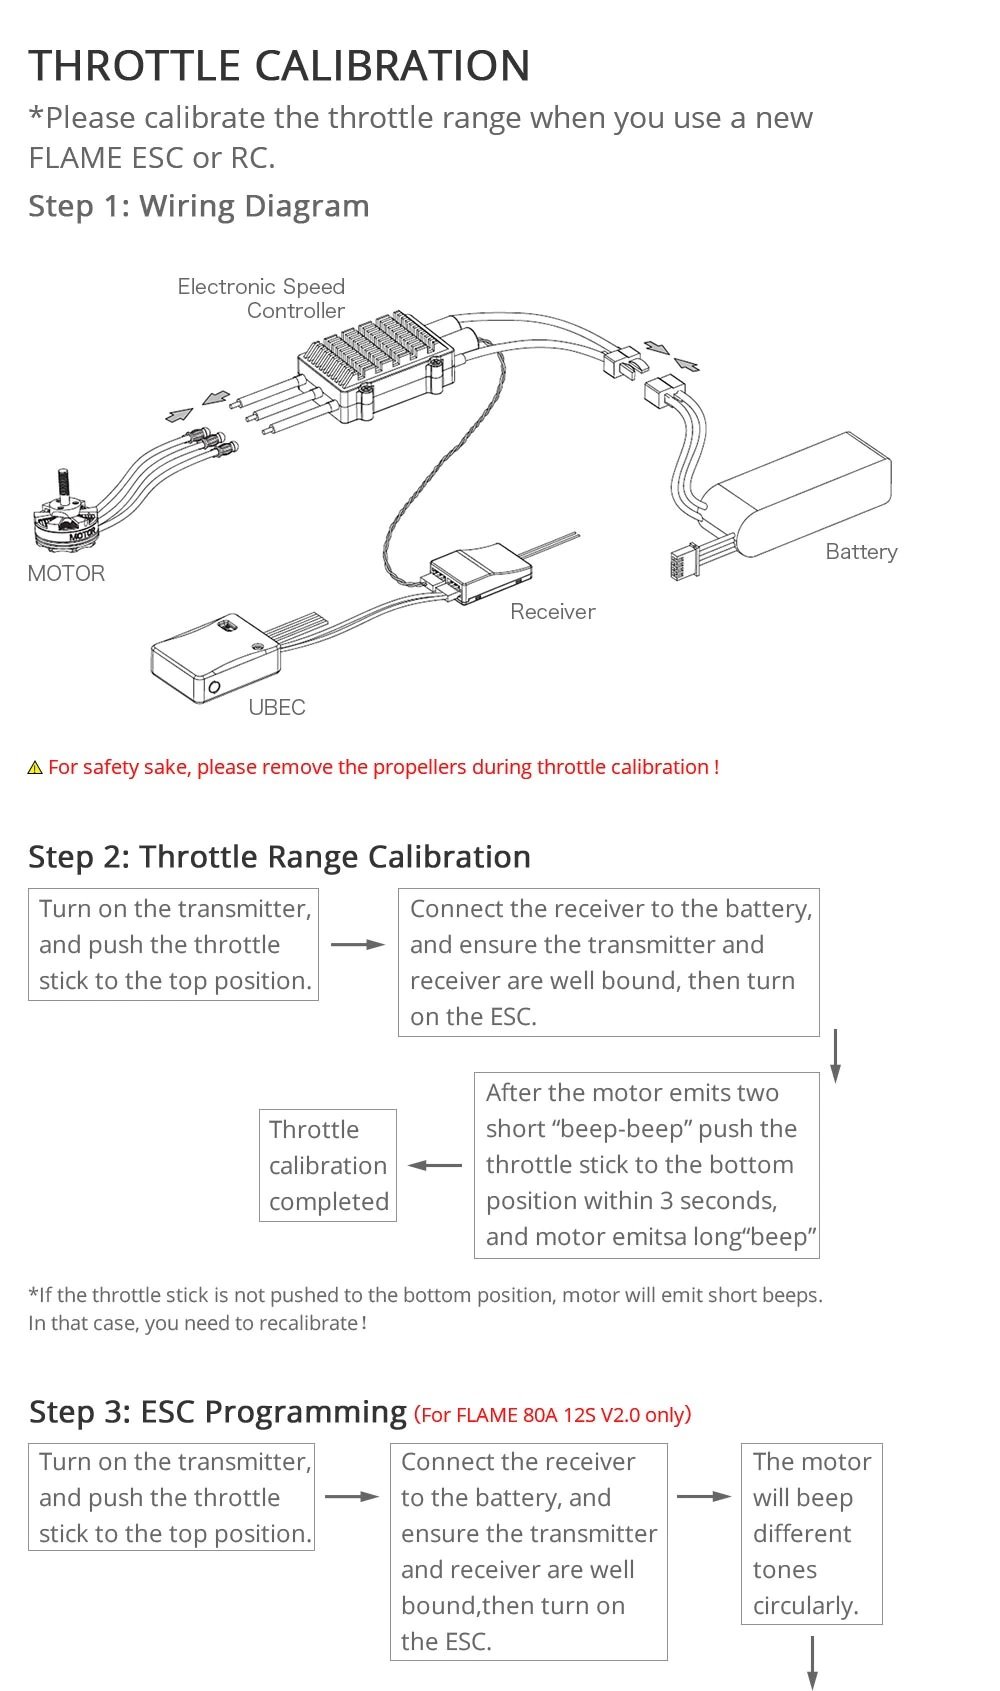 T-Motor Wiring Steps